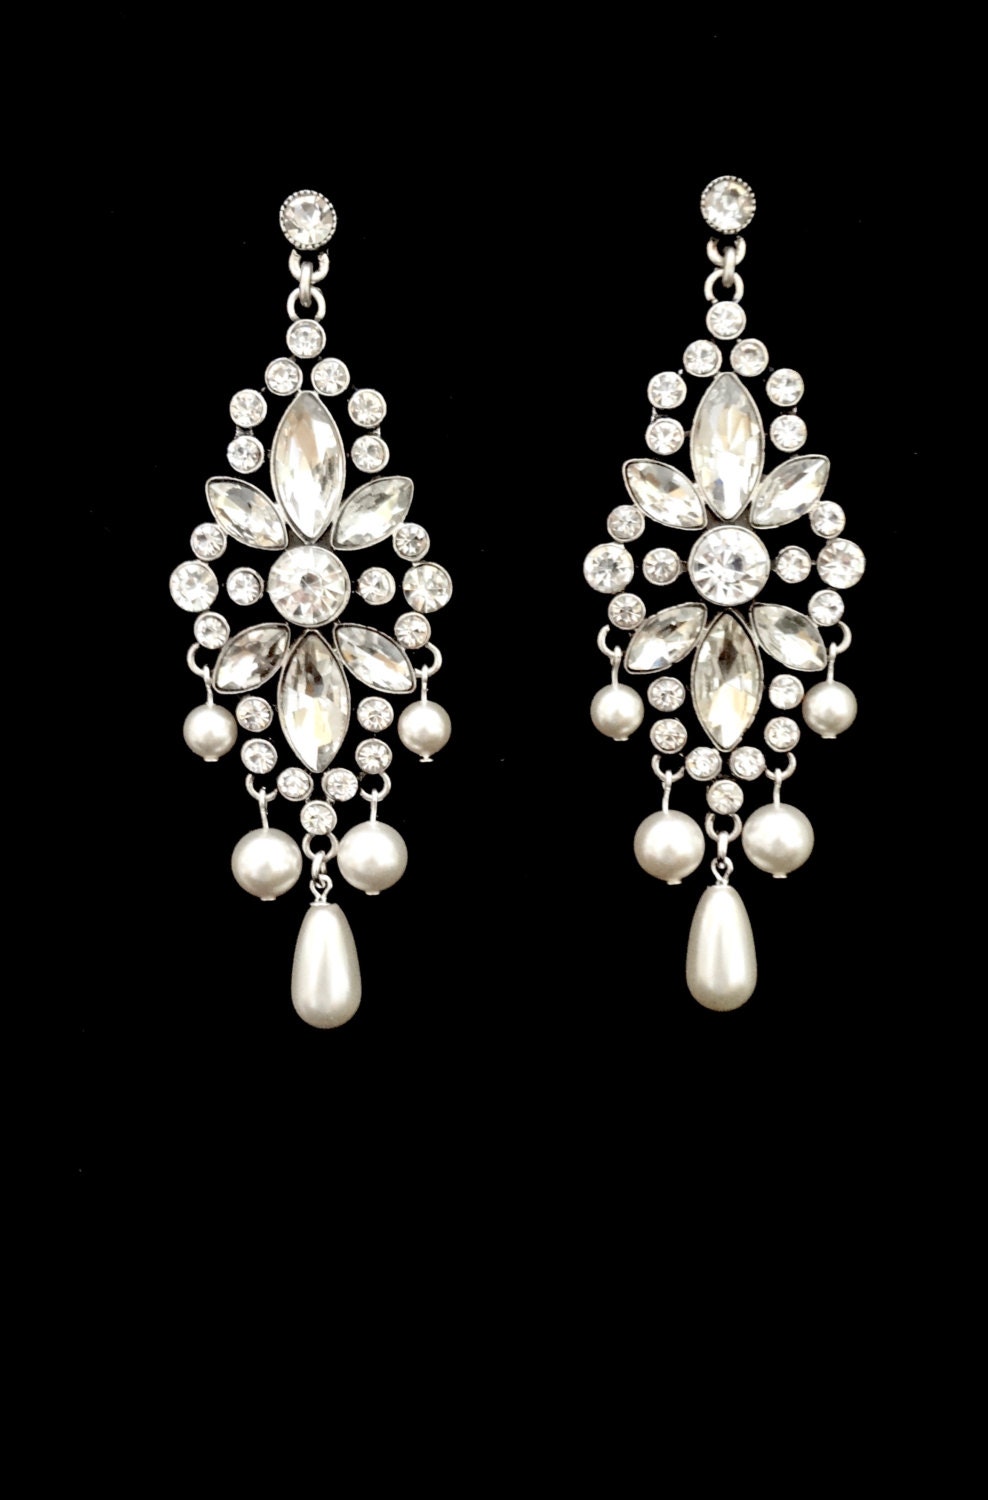 Pearl chandelier earrings Brides earrings Couture wedding